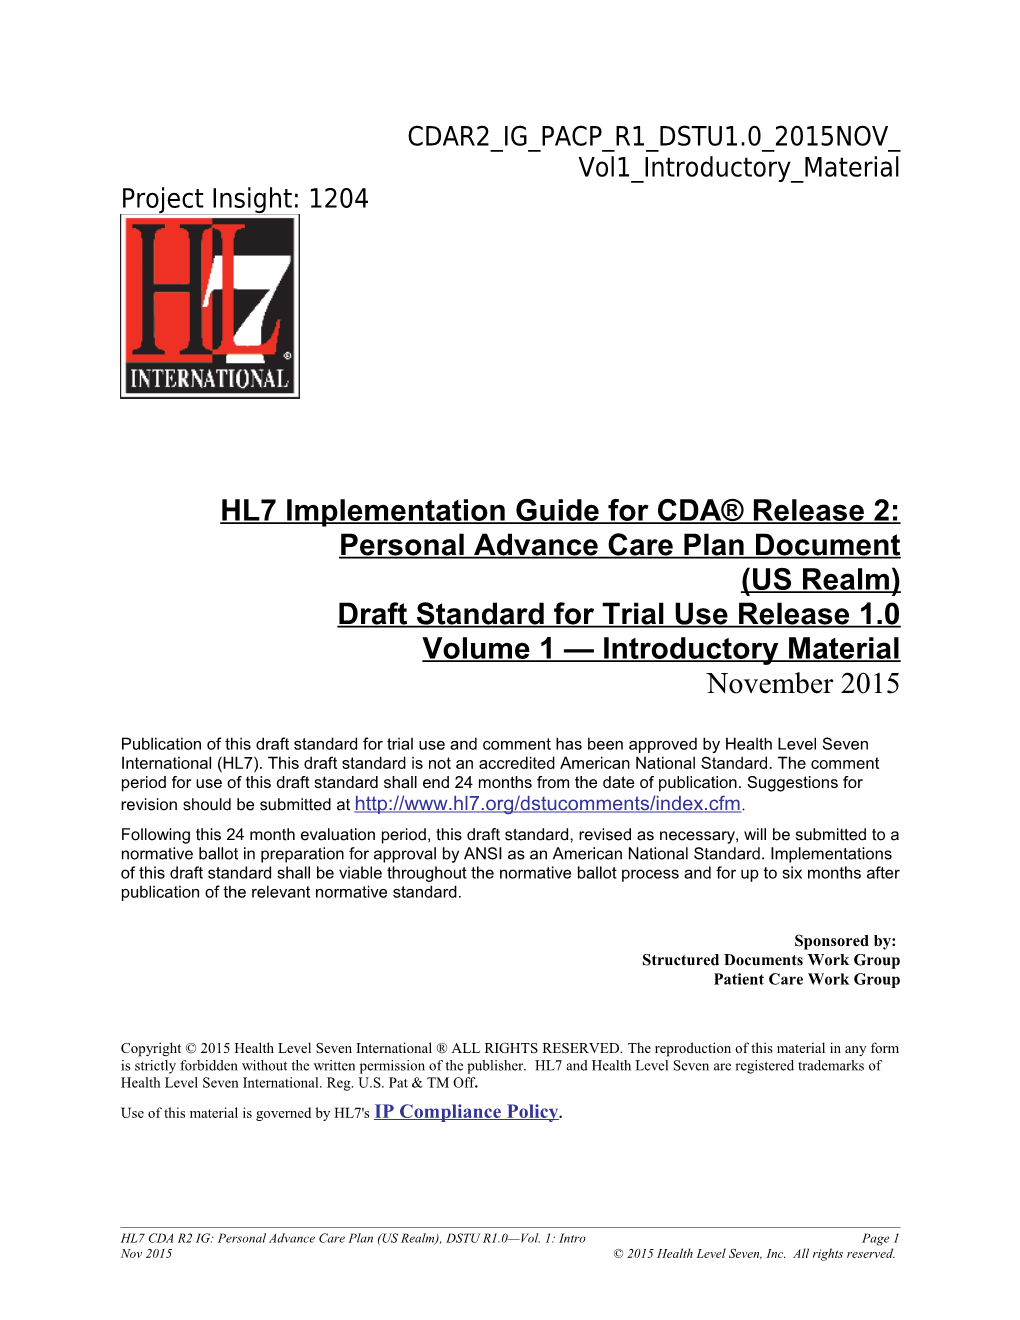 CDAR2 IG CCDA CLINNOTES R2 D1 2014NOV V1 Introductory Material